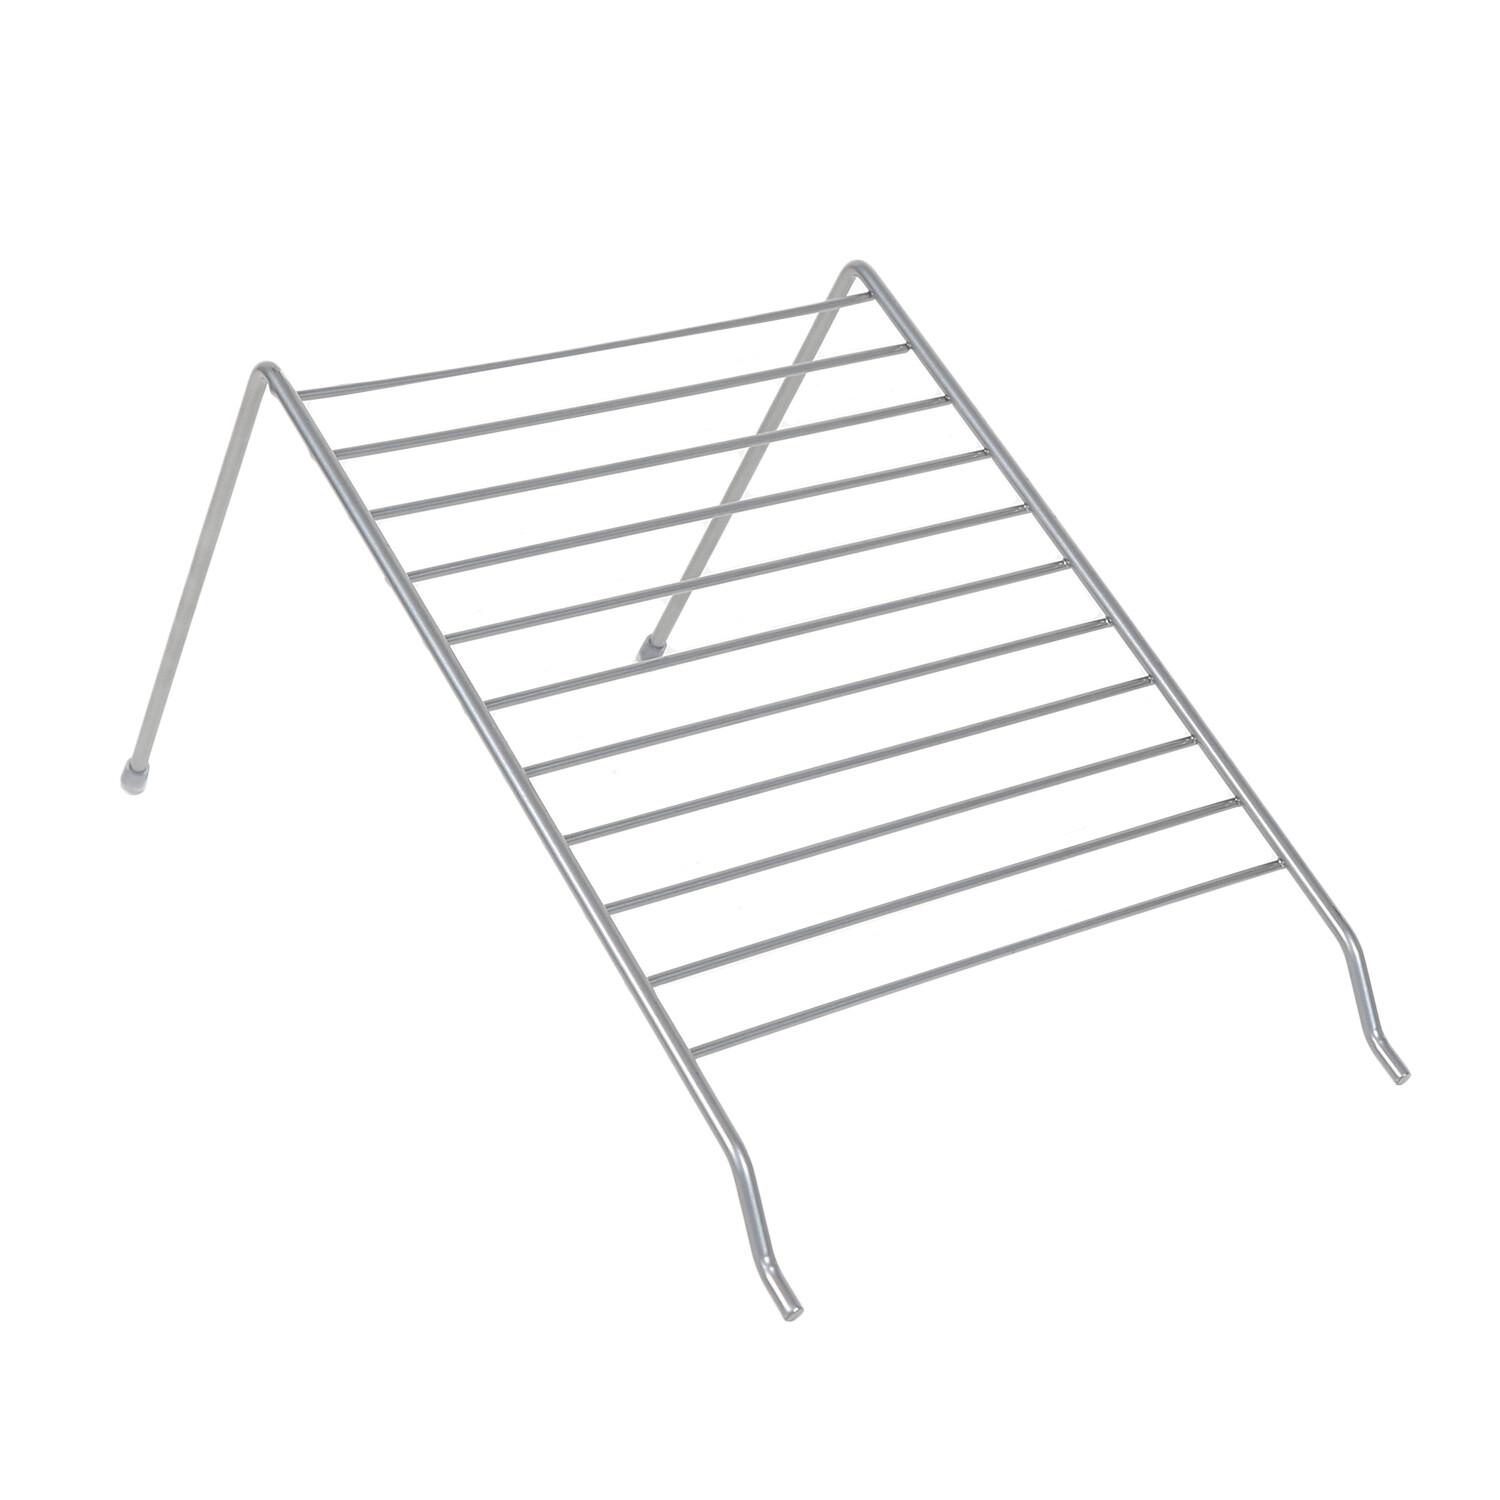 Extendible Wire Shelf Rack Image 2